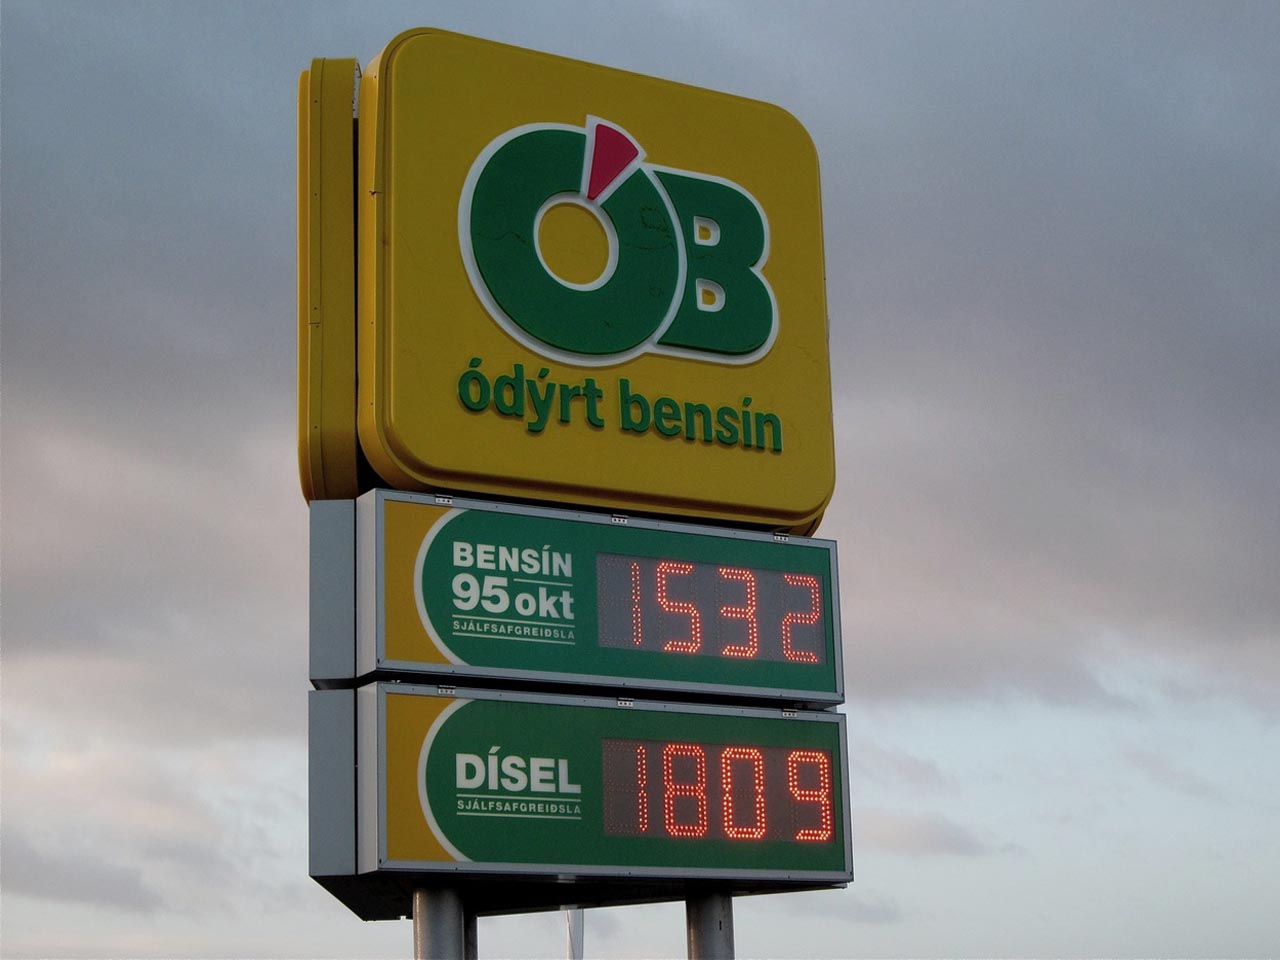 Fuel (diesel, petrol, gas) prices in Iceland